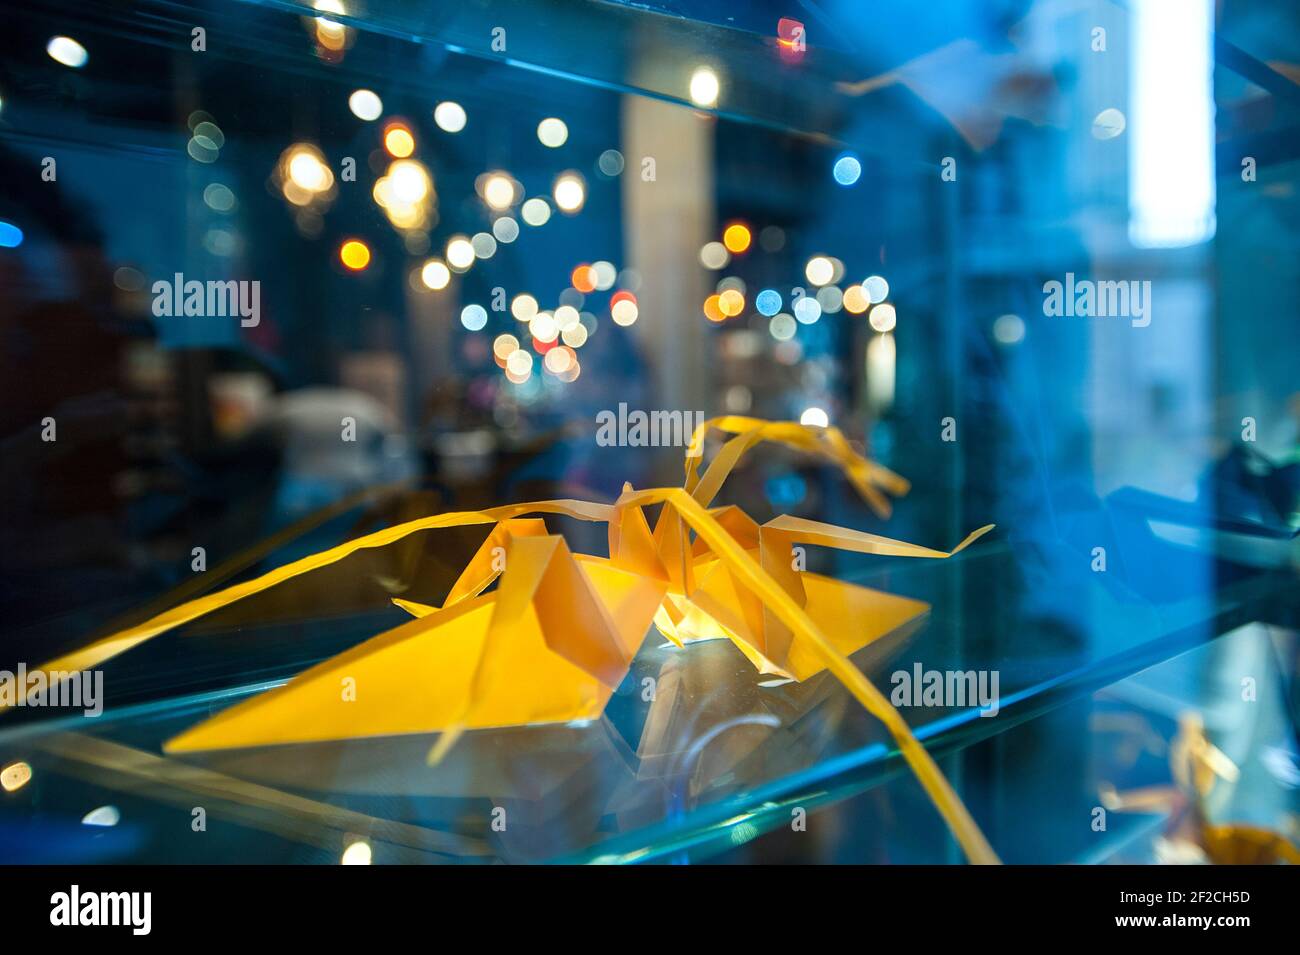 Origami paper folding in window display, Barcelona, Catalonia, Spain Stock Photo